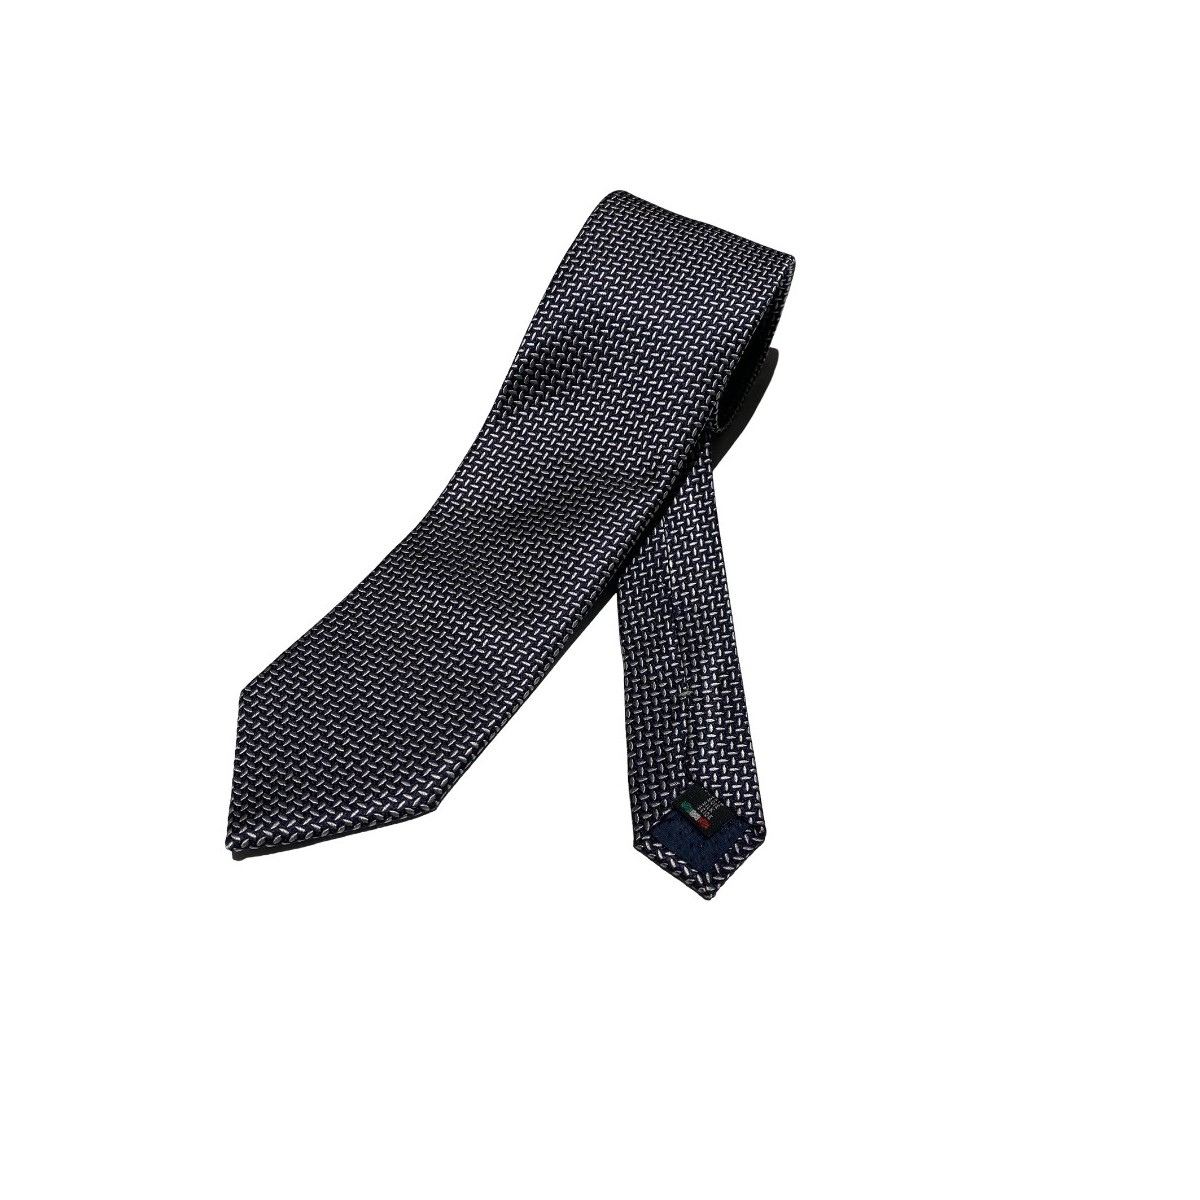 GALISE cravatta 3 pieghe New York nero, 100% seta jacquard